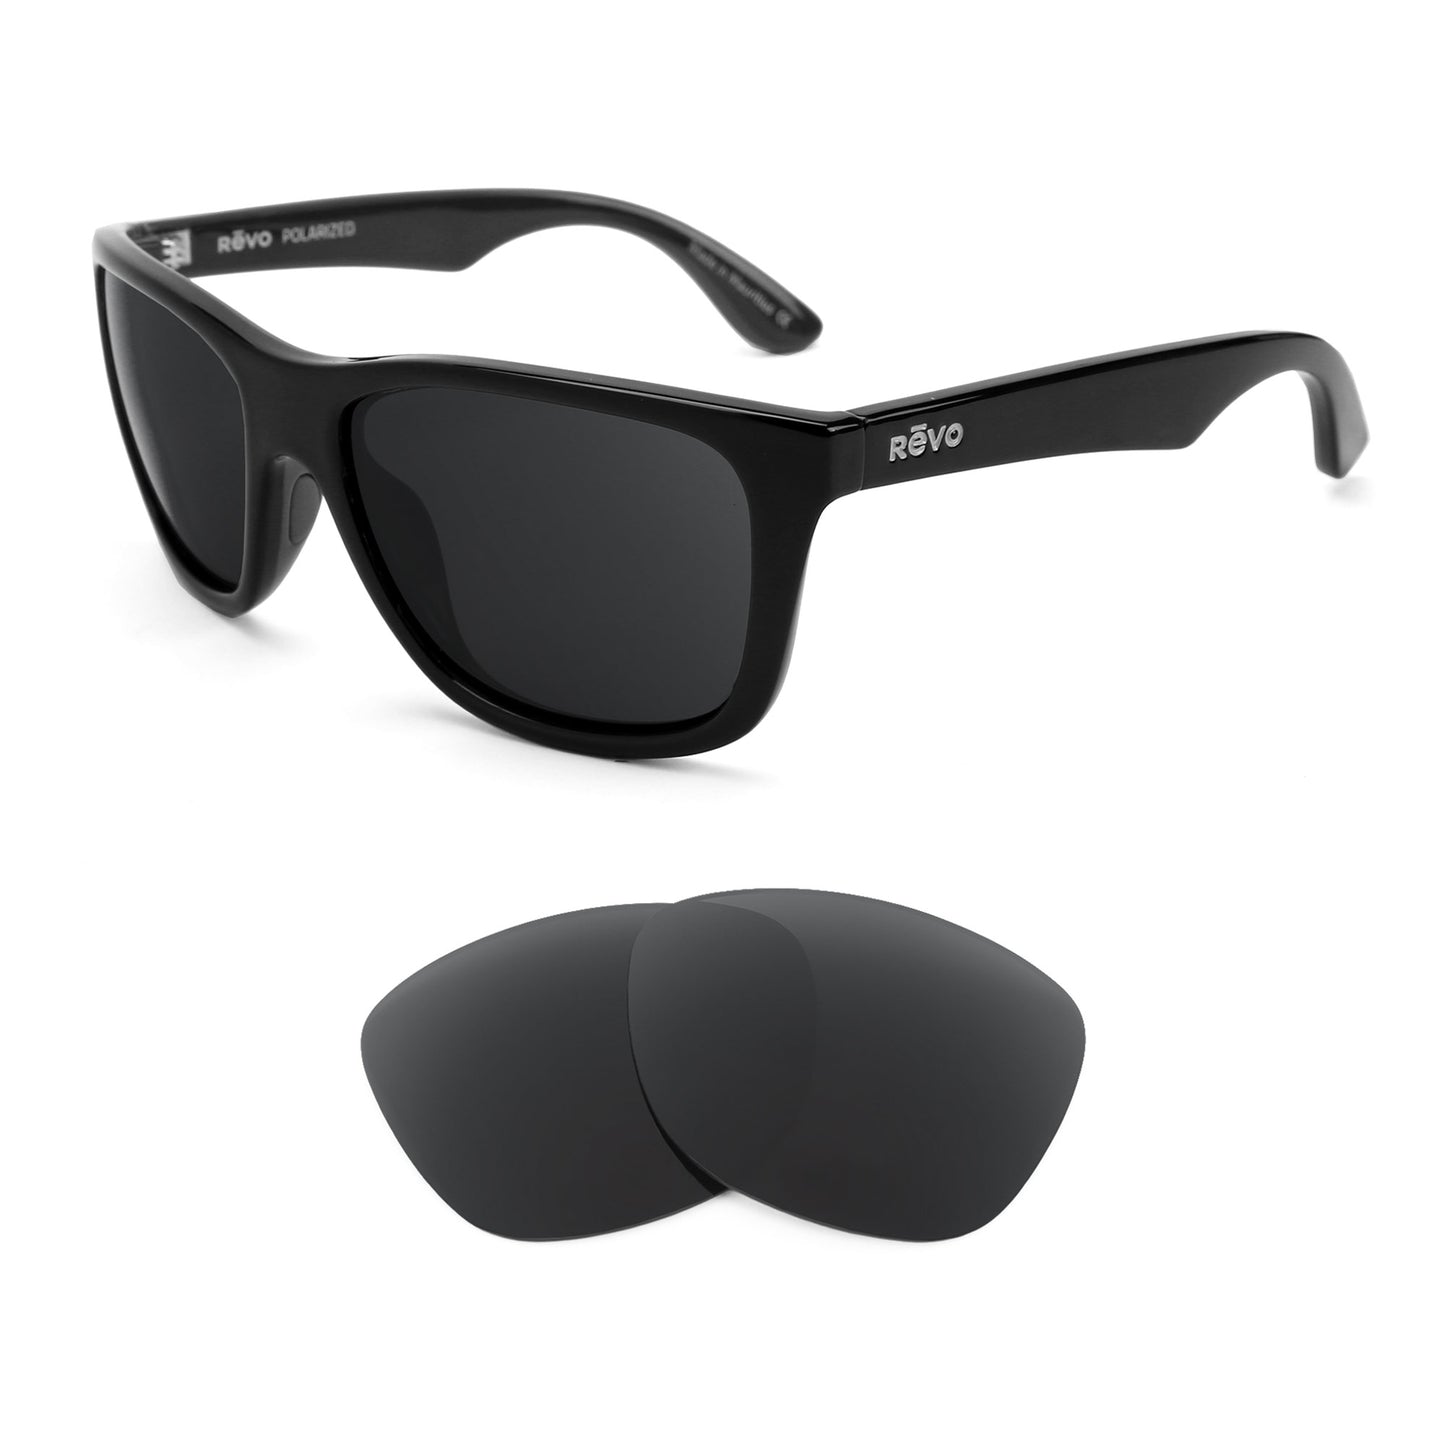 Revo Otis RE1001 sunglasses with replacement lenses